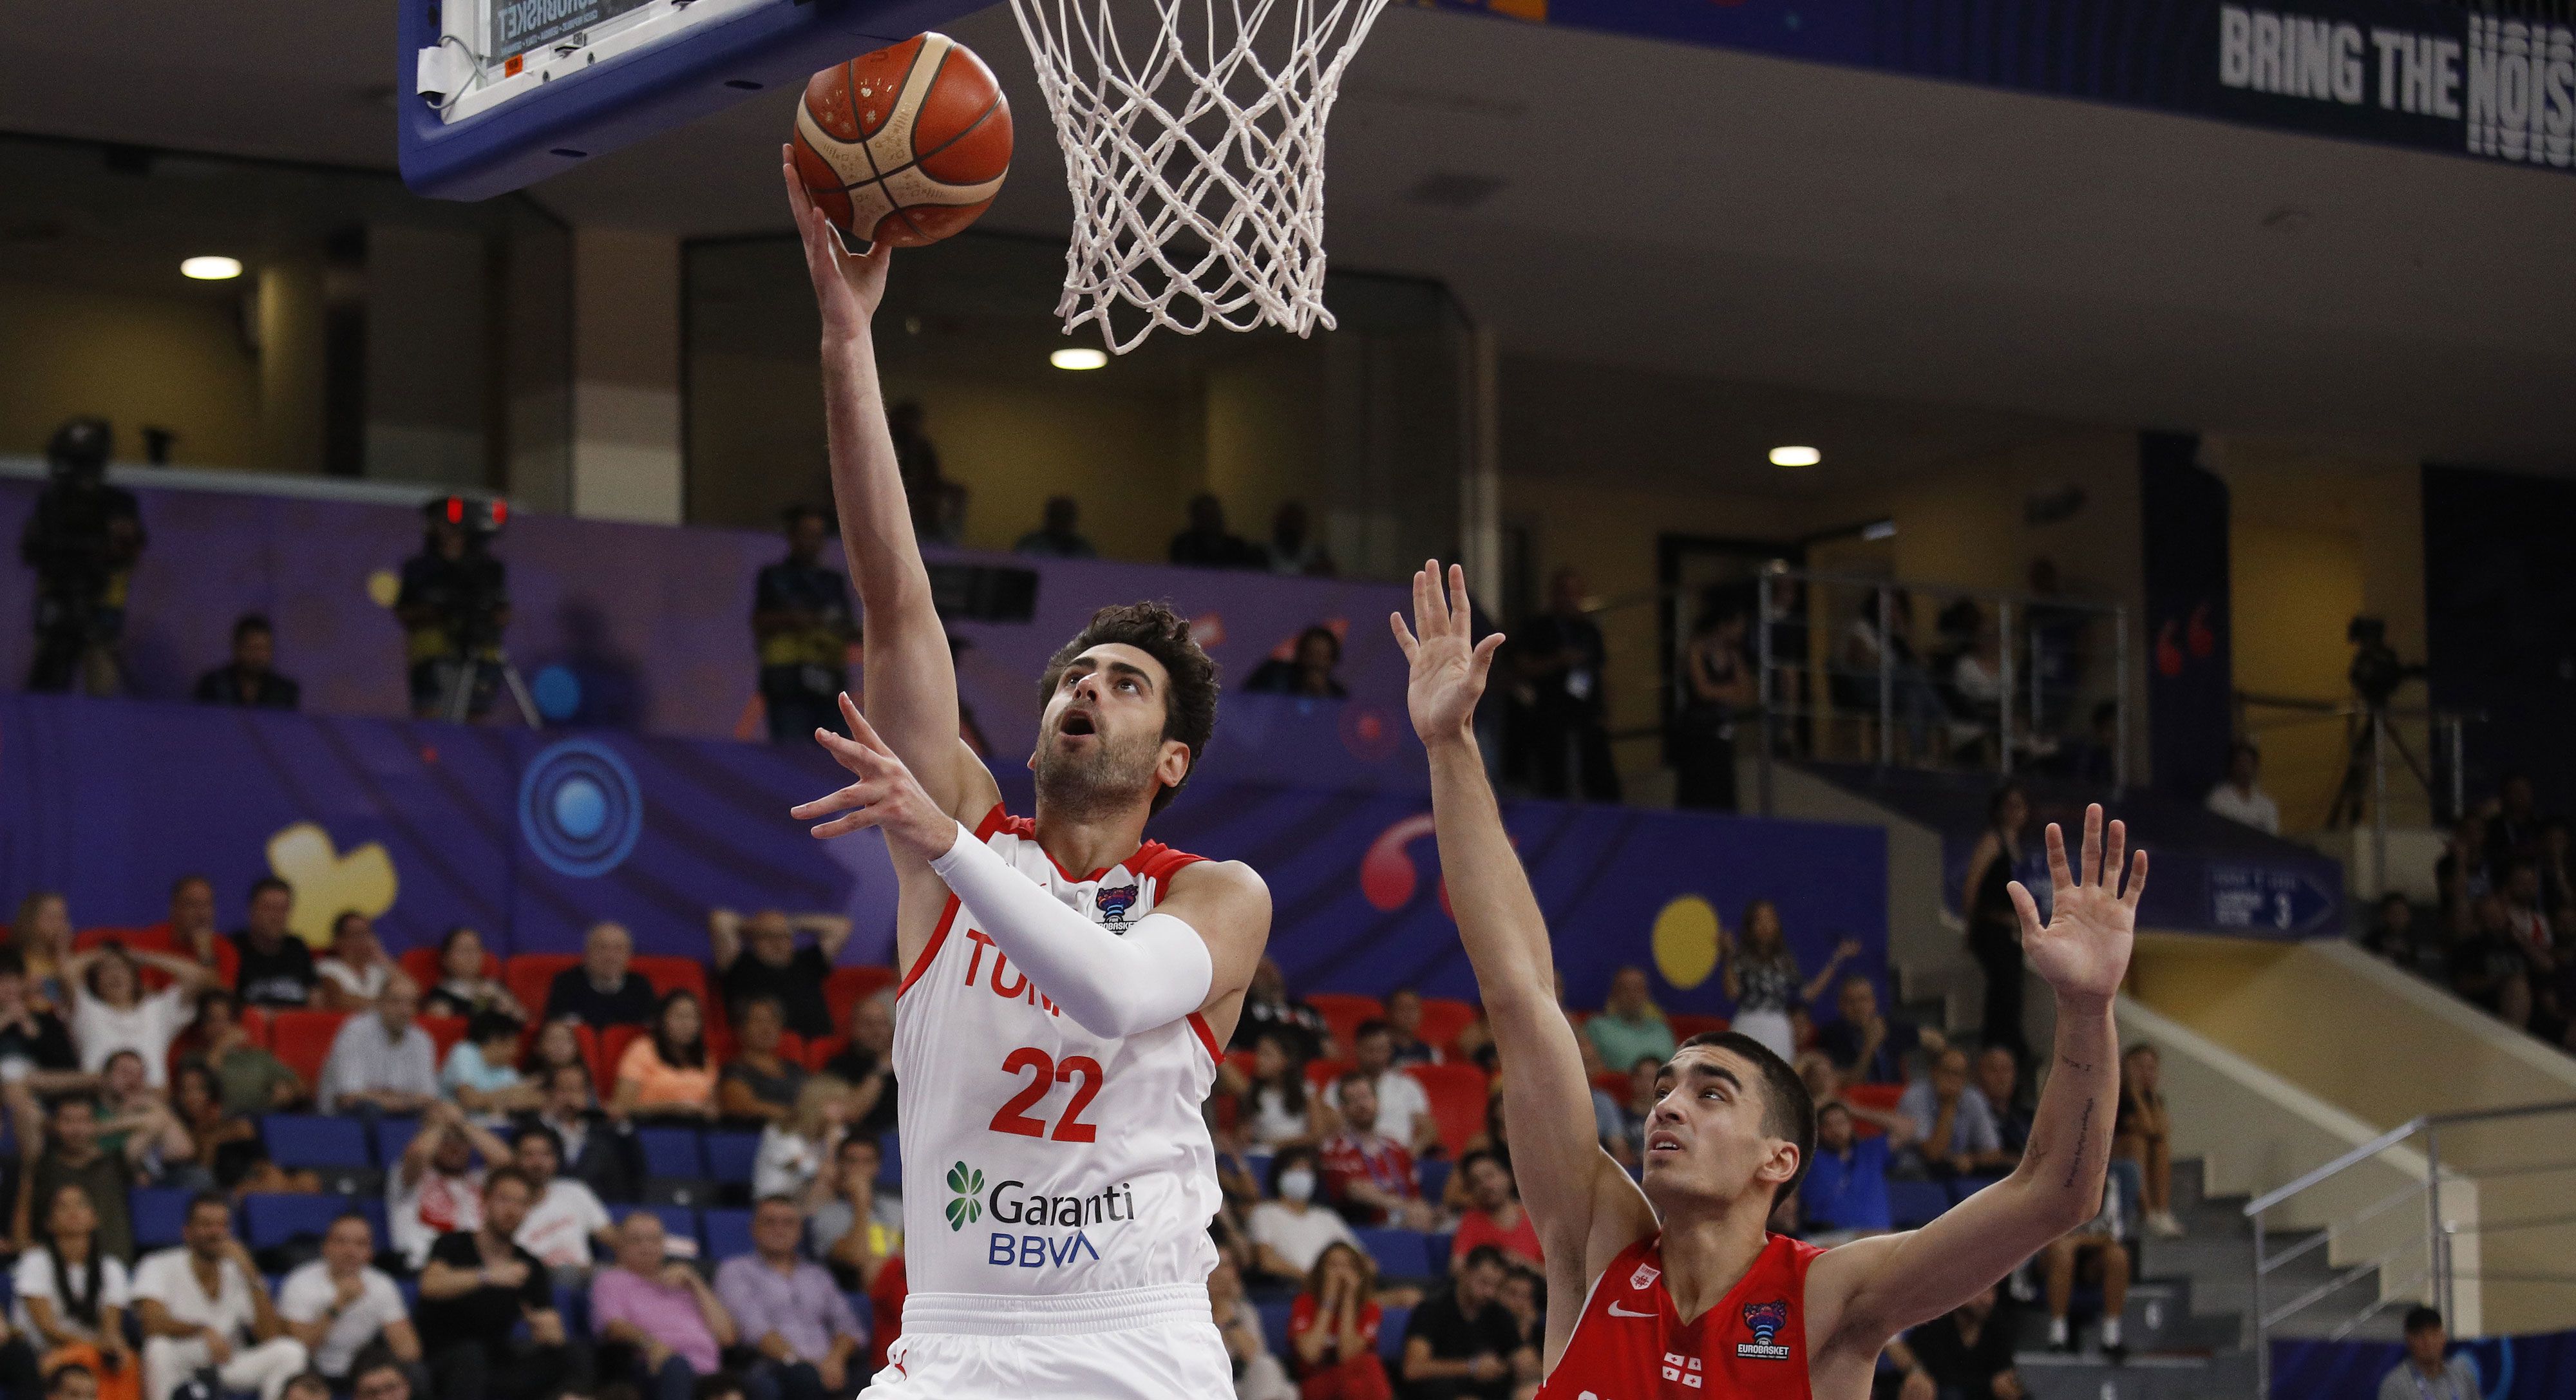 NBA Draft 2016: Furkan Korkmaz to Remain in Turkey Another Season